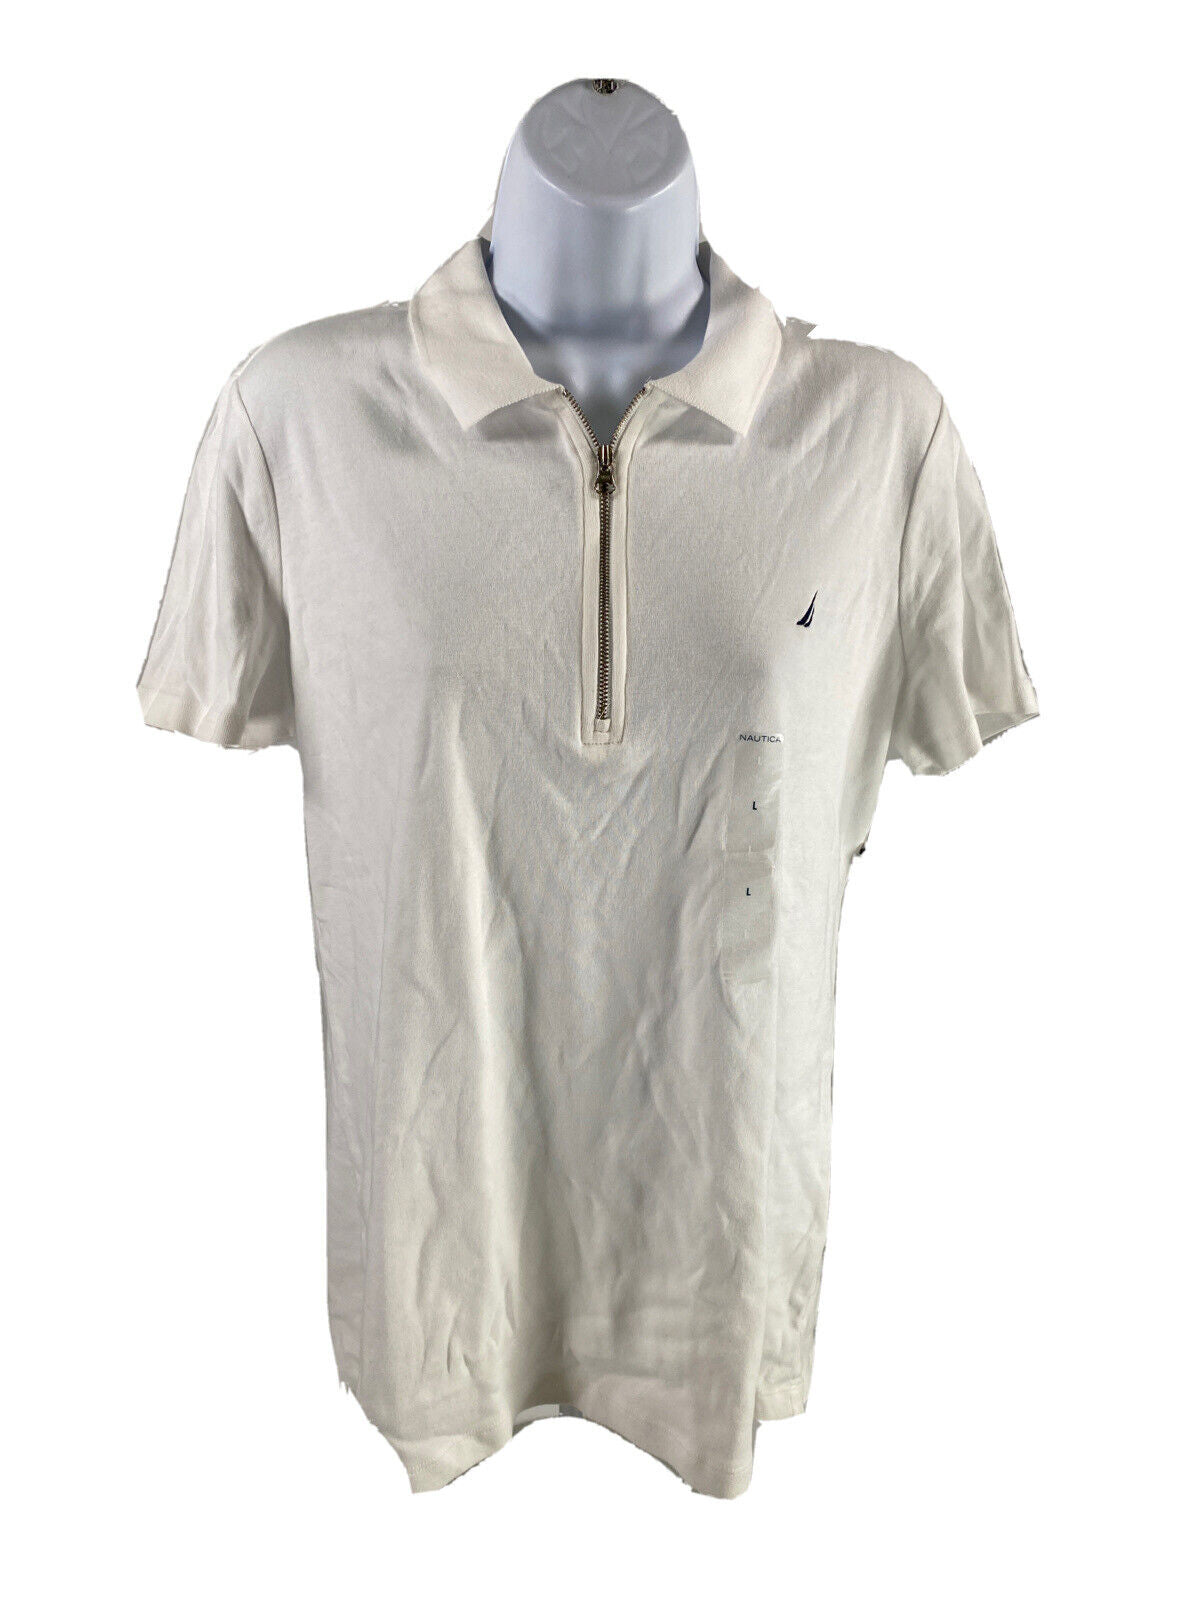 NEW Nautica Women's White Short Sleeve 1/4 Zip Polo Shirt - L